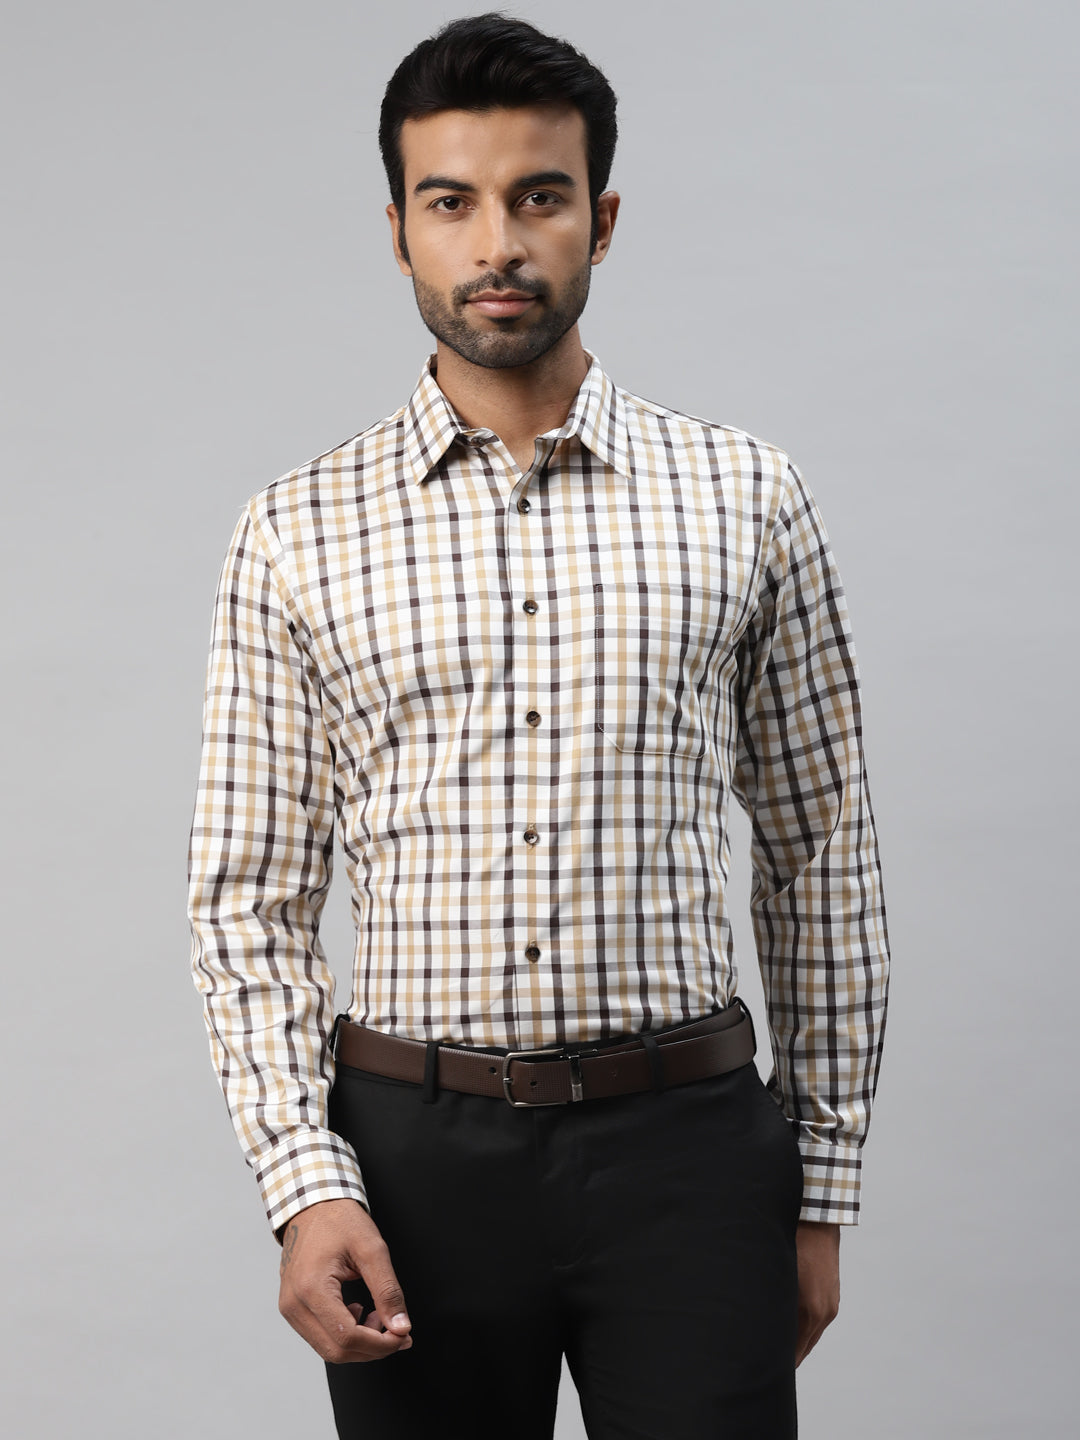 Men's Multicolored Checks Slim Fit Shirt by Don Vino